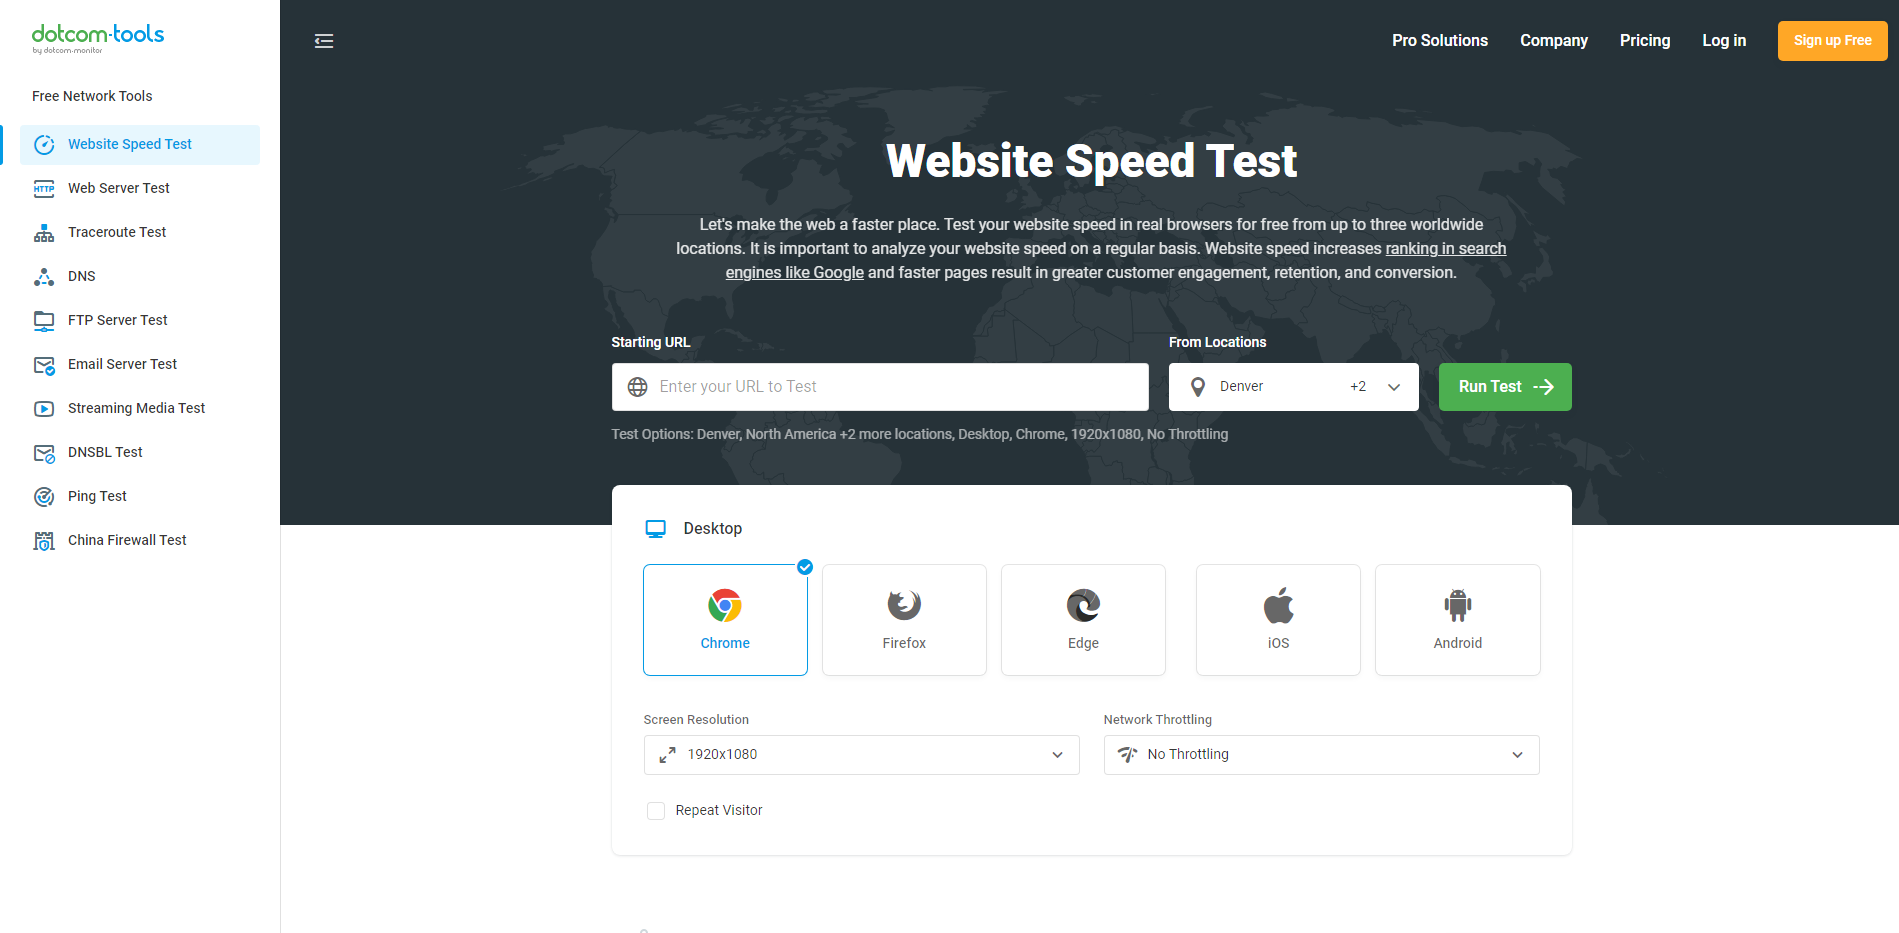 dotcom monitor - Website Speed Test